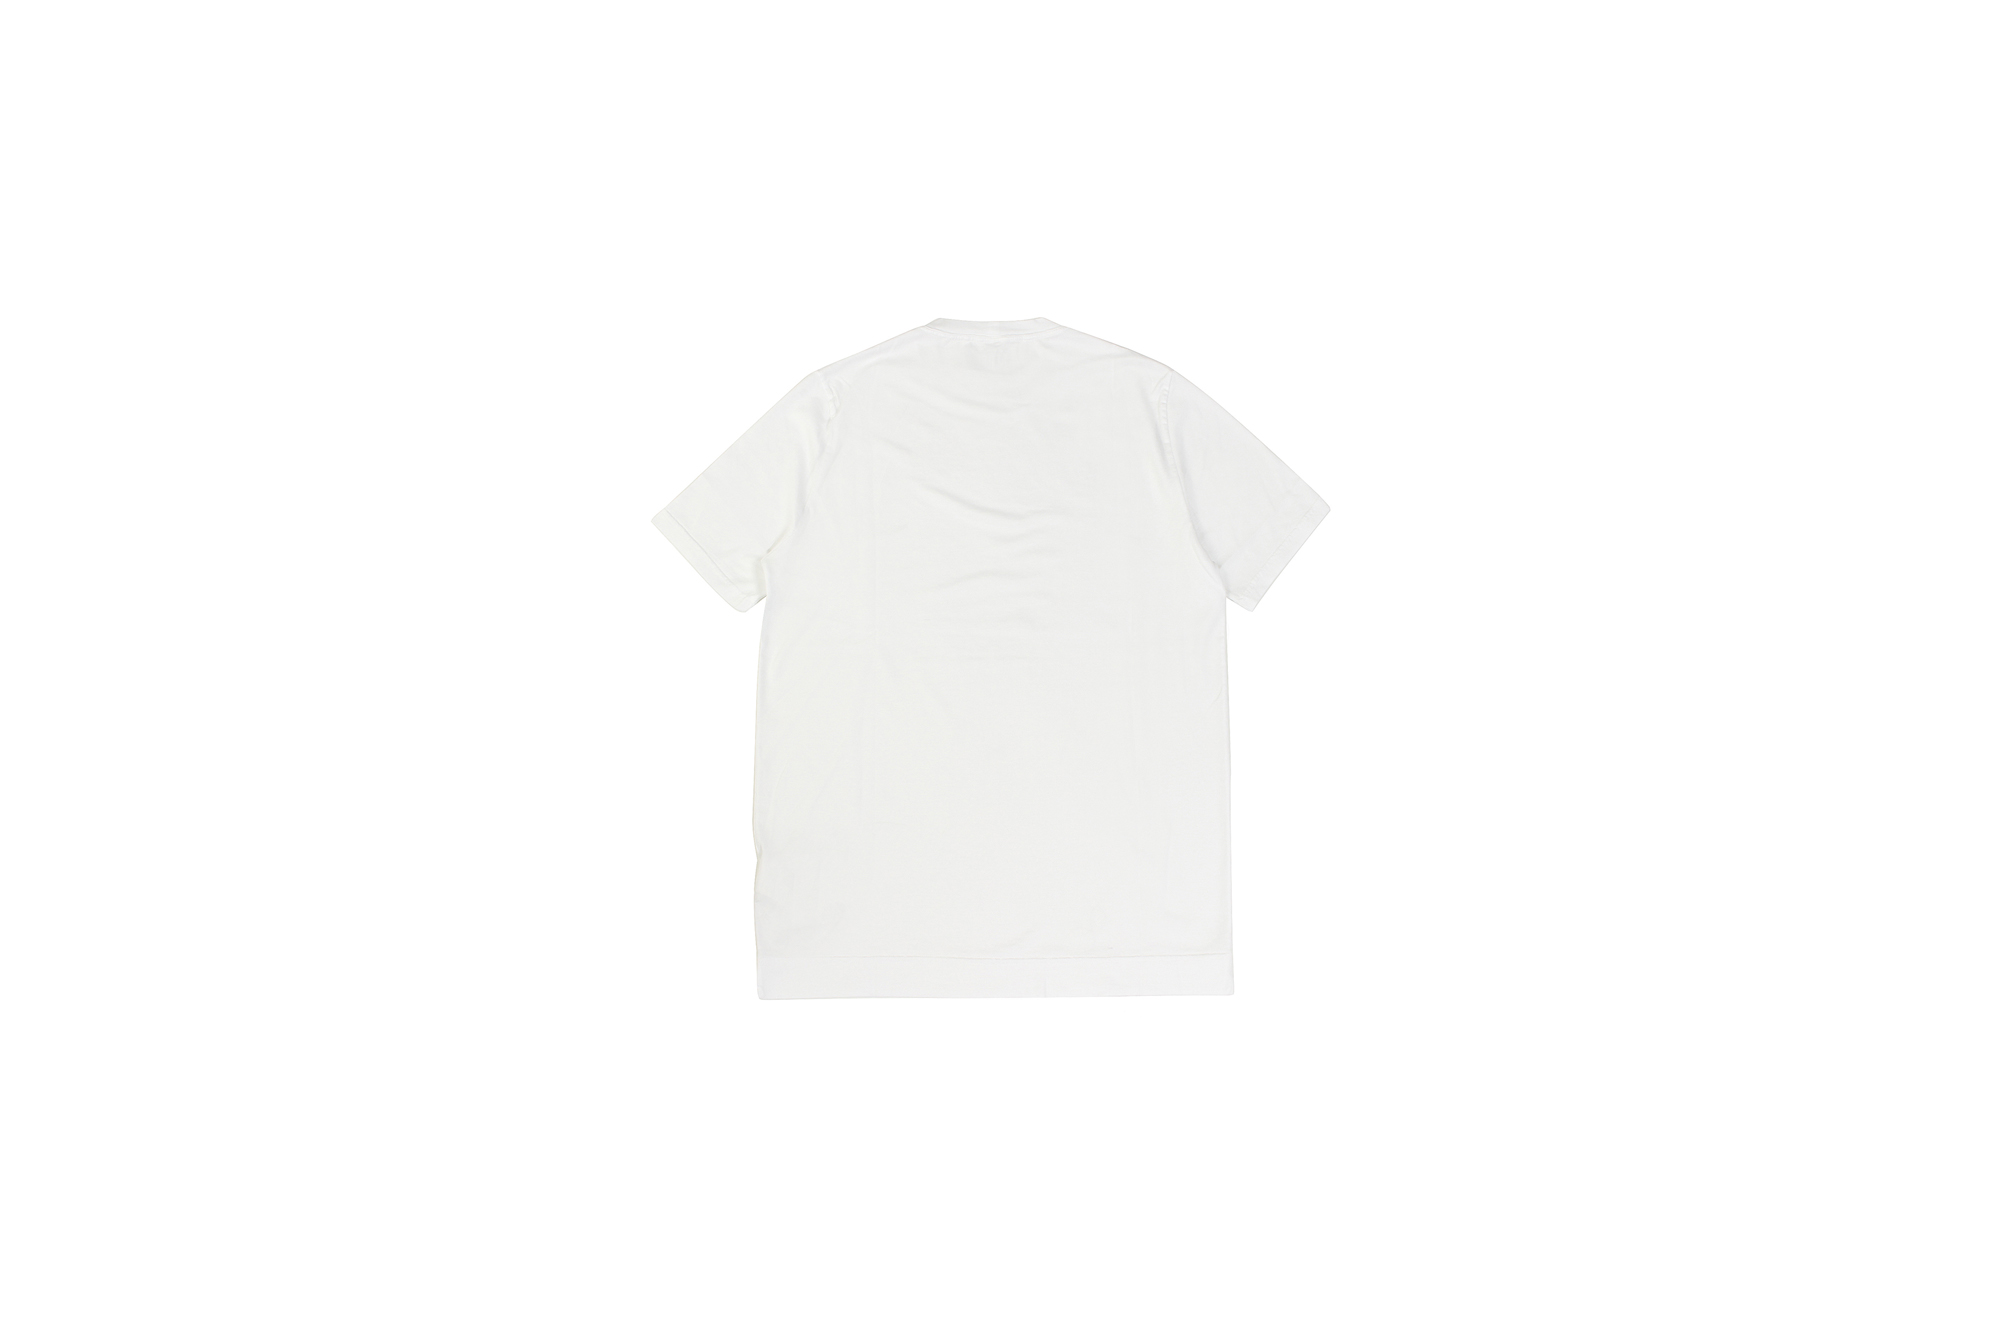 FEDELI(フェデーリ) Crew Neck T-shirt (クルーネック Tシャツ) ギザコットン Tシャツ WHITE (ホワイト・41) made in italy (イタリア製) 2020 春夏 【ご予約開始】愛知 名古屋 altoediritto アルトエデリット TEE